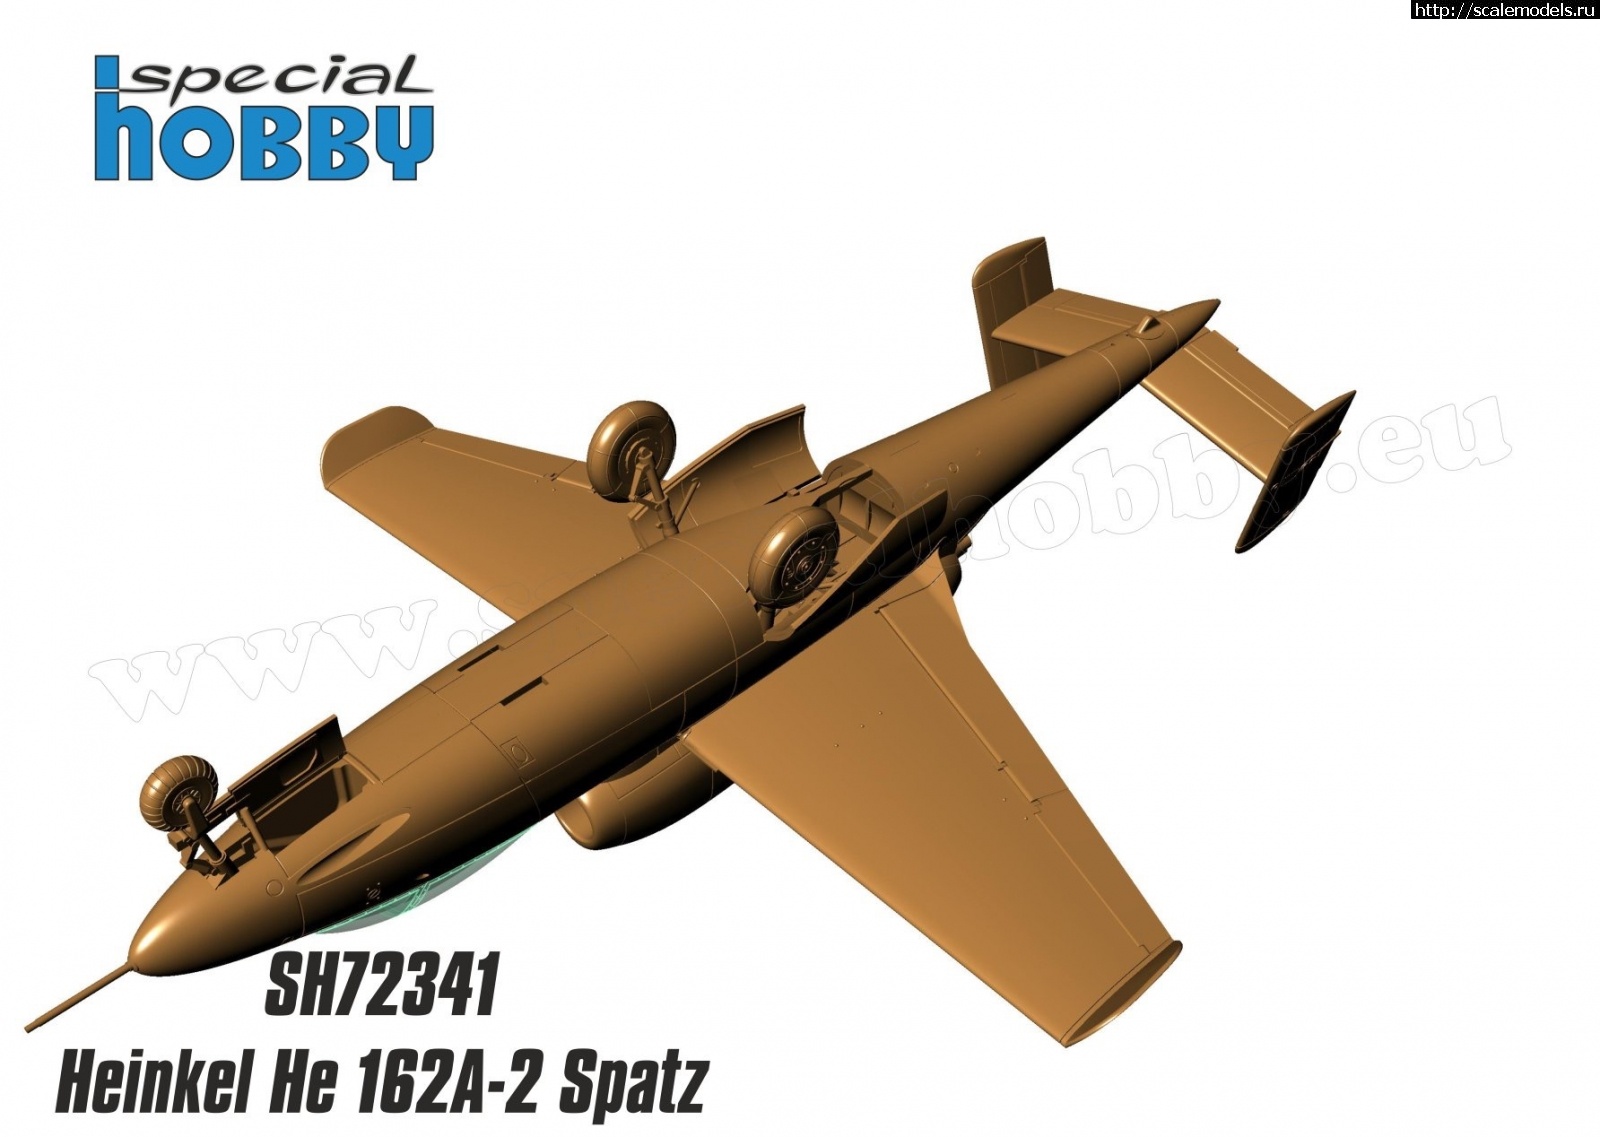 1579848653_E8A89F53-4FD1-4DBB-88AA-4228EDD1DCA1.jpeg :  Special Hobby 1/72 Heinkel He 162A Spatz - 3D-  